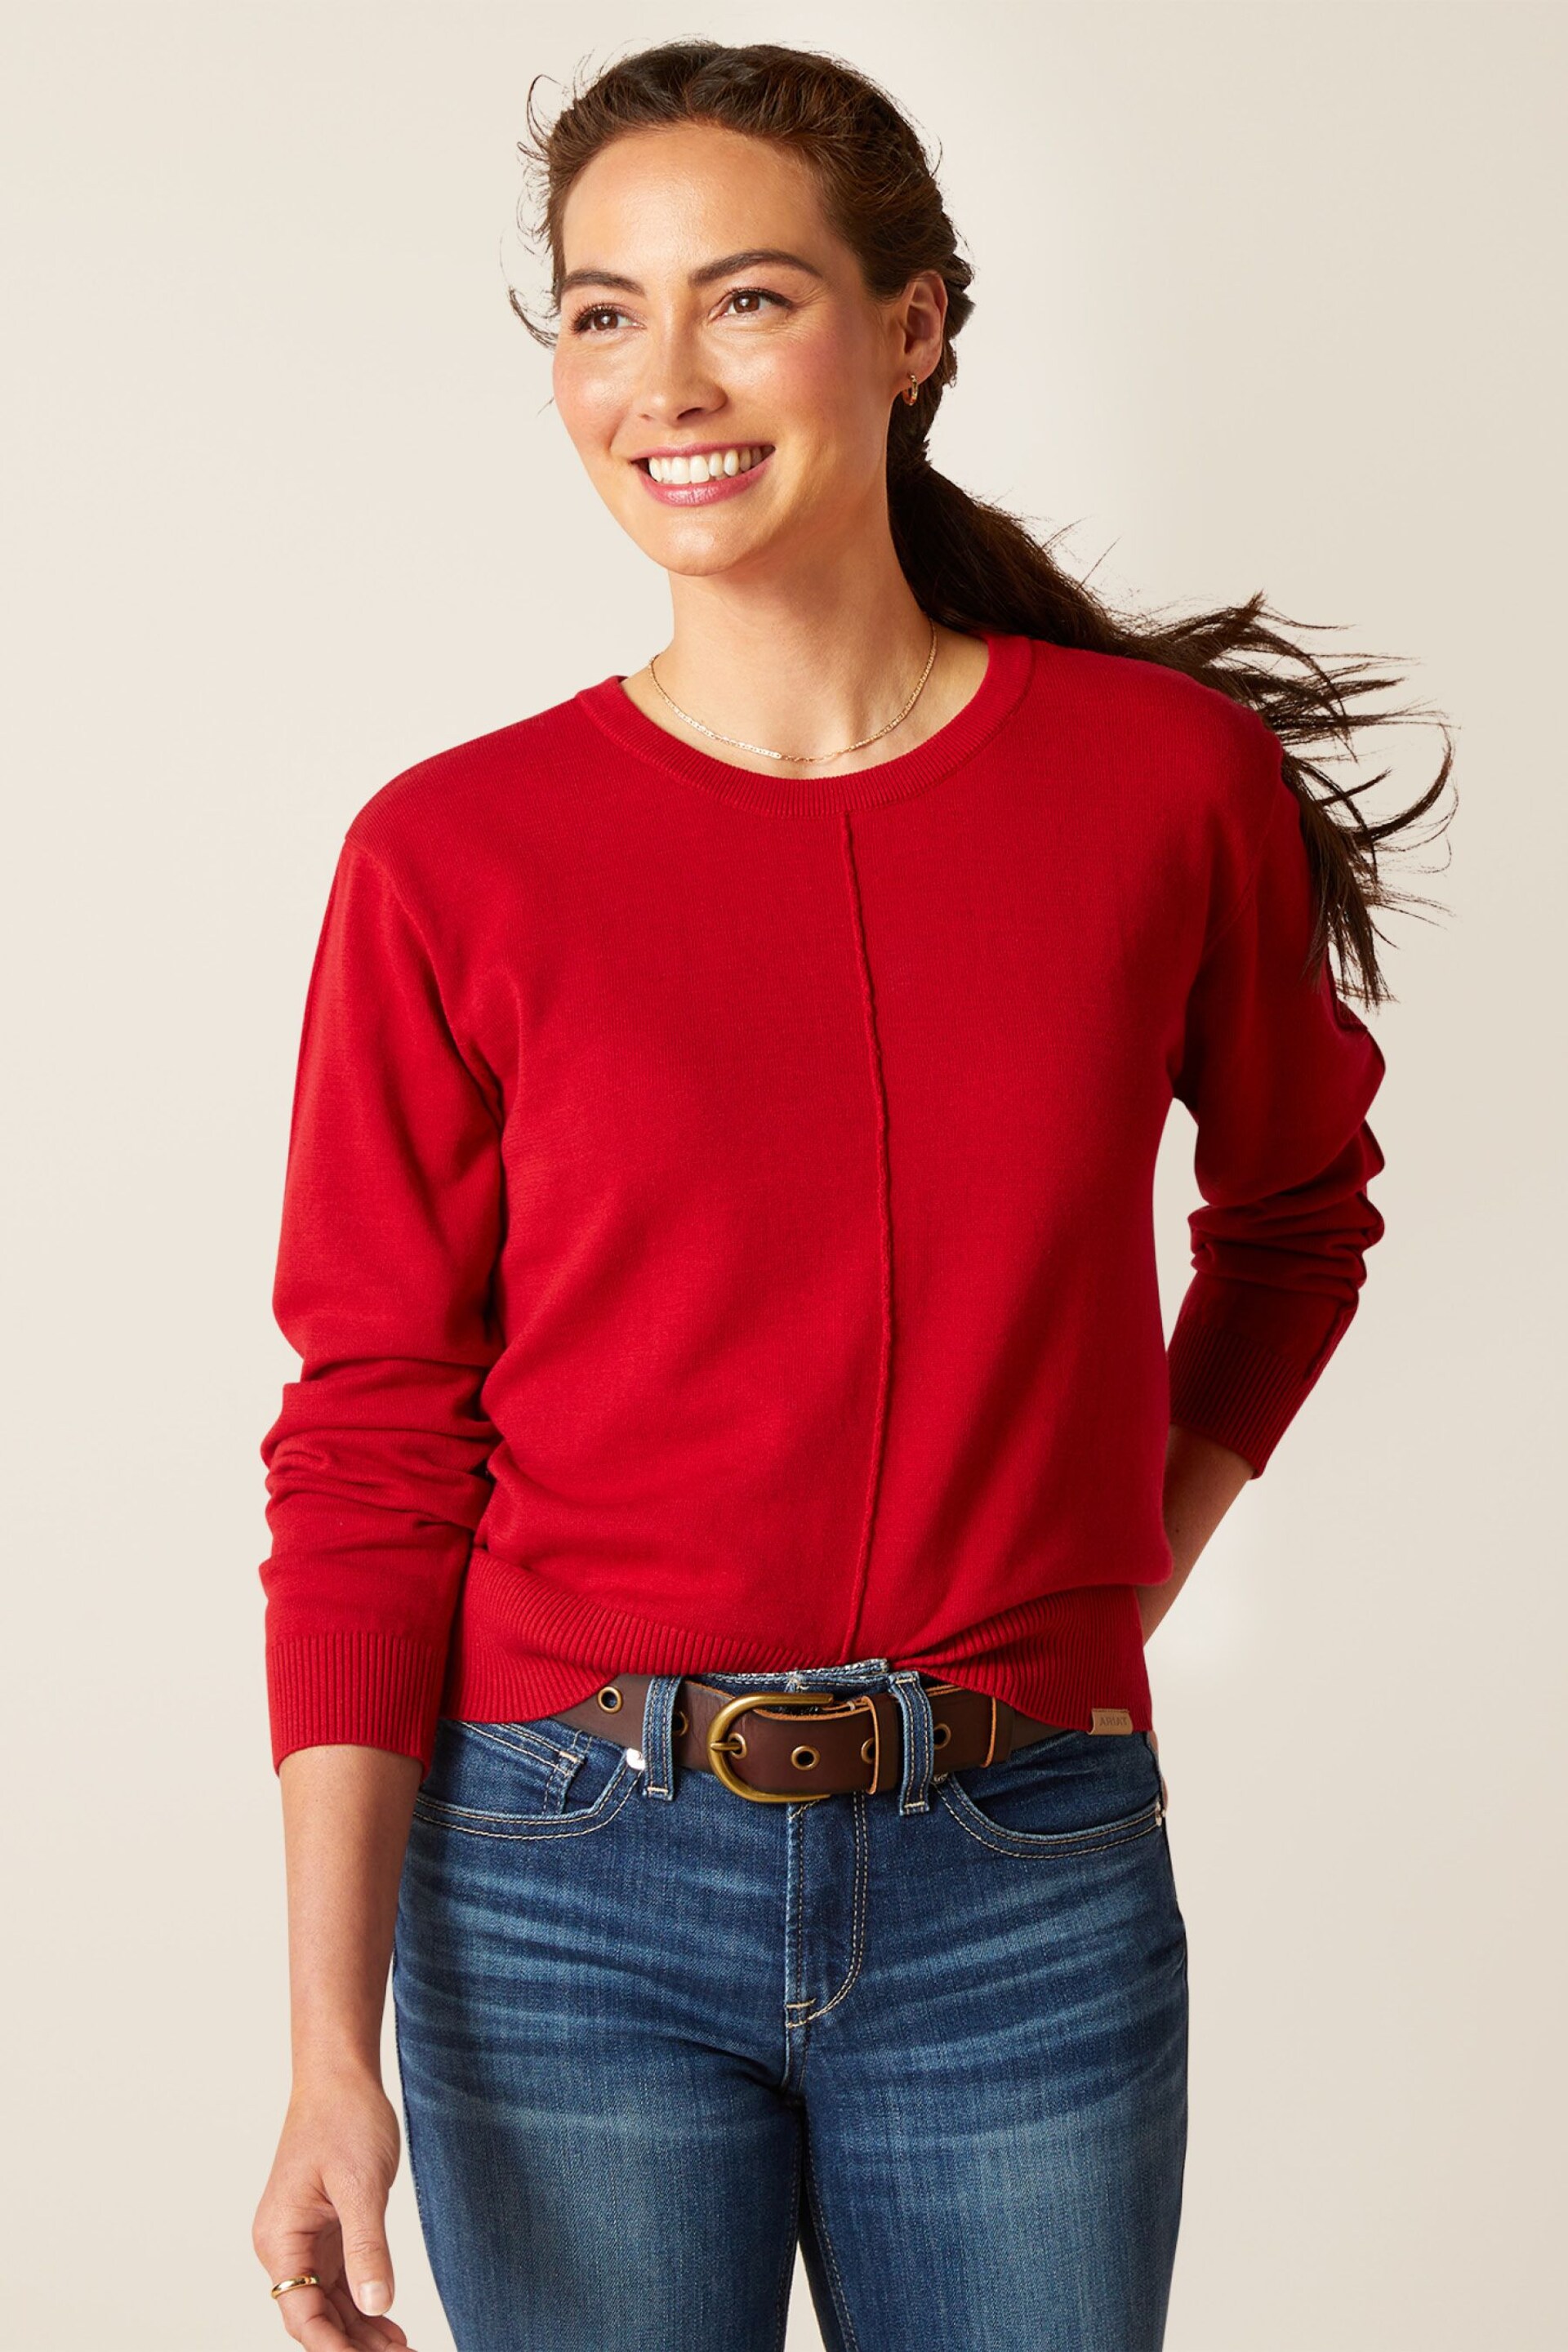 Ariat Red Peninsula Jumper Sweater - Image 1 of 4